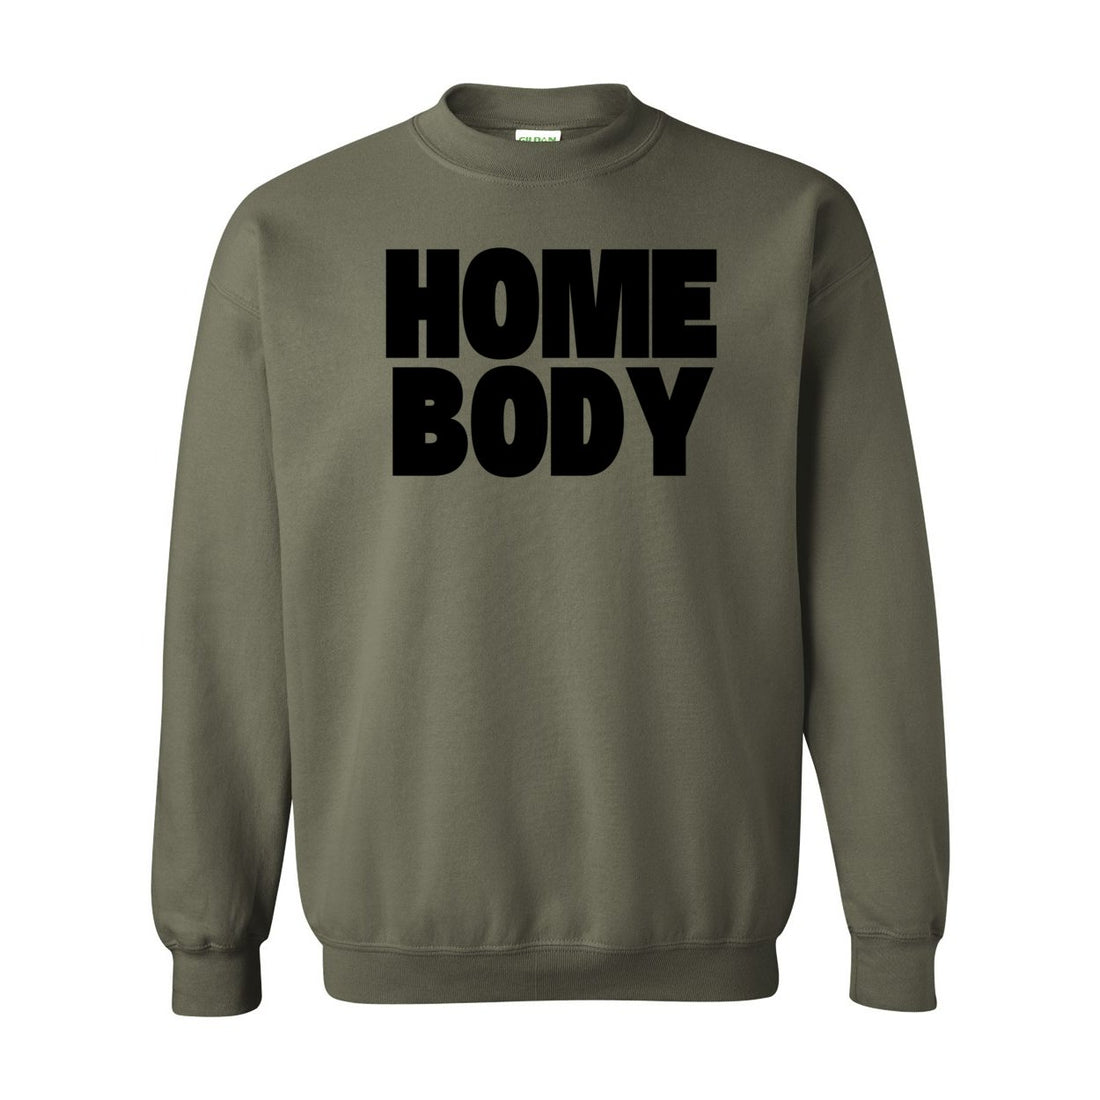 Home Body Crewneck Sweatshirt - Sweaters/Hoodies - Positively Sassy - Home Body Crewneck Sweatshirt